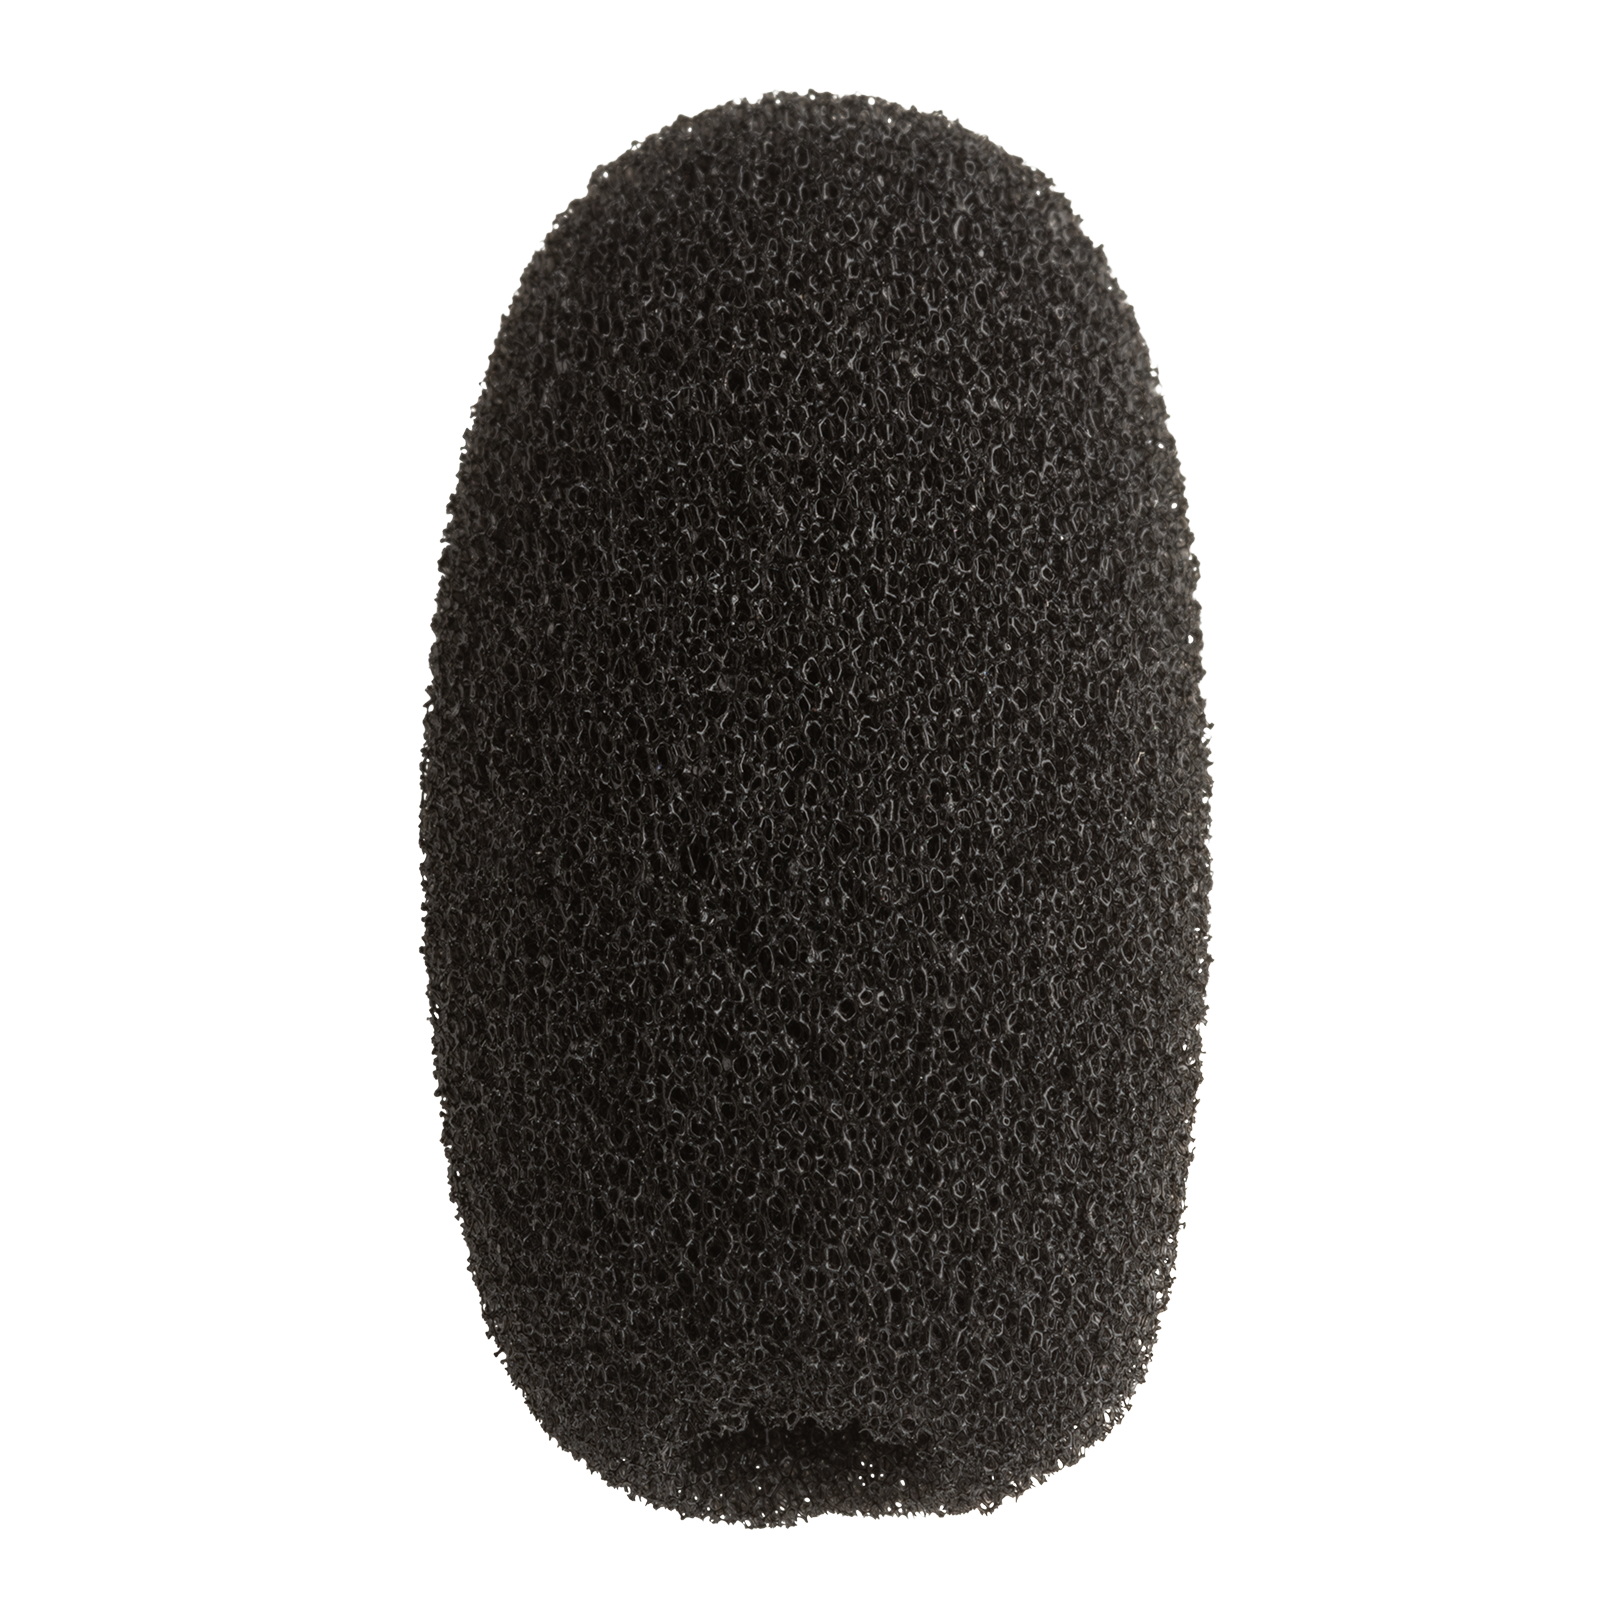 JBL Microphone sponge for Quantum 100 - Black - Wind cap - Hero